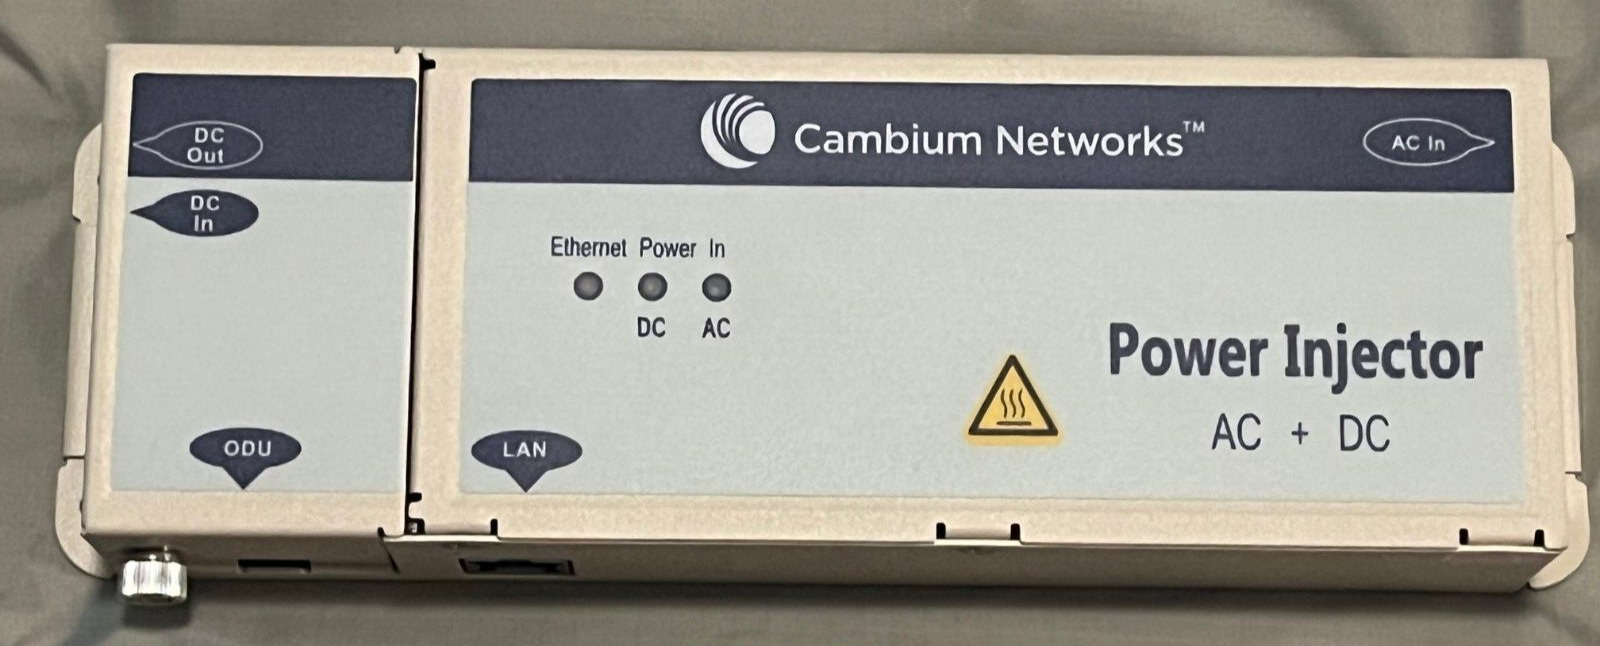 Cambium Networks PTP 650 E100109C G AC + DC Enhanced Power Injector